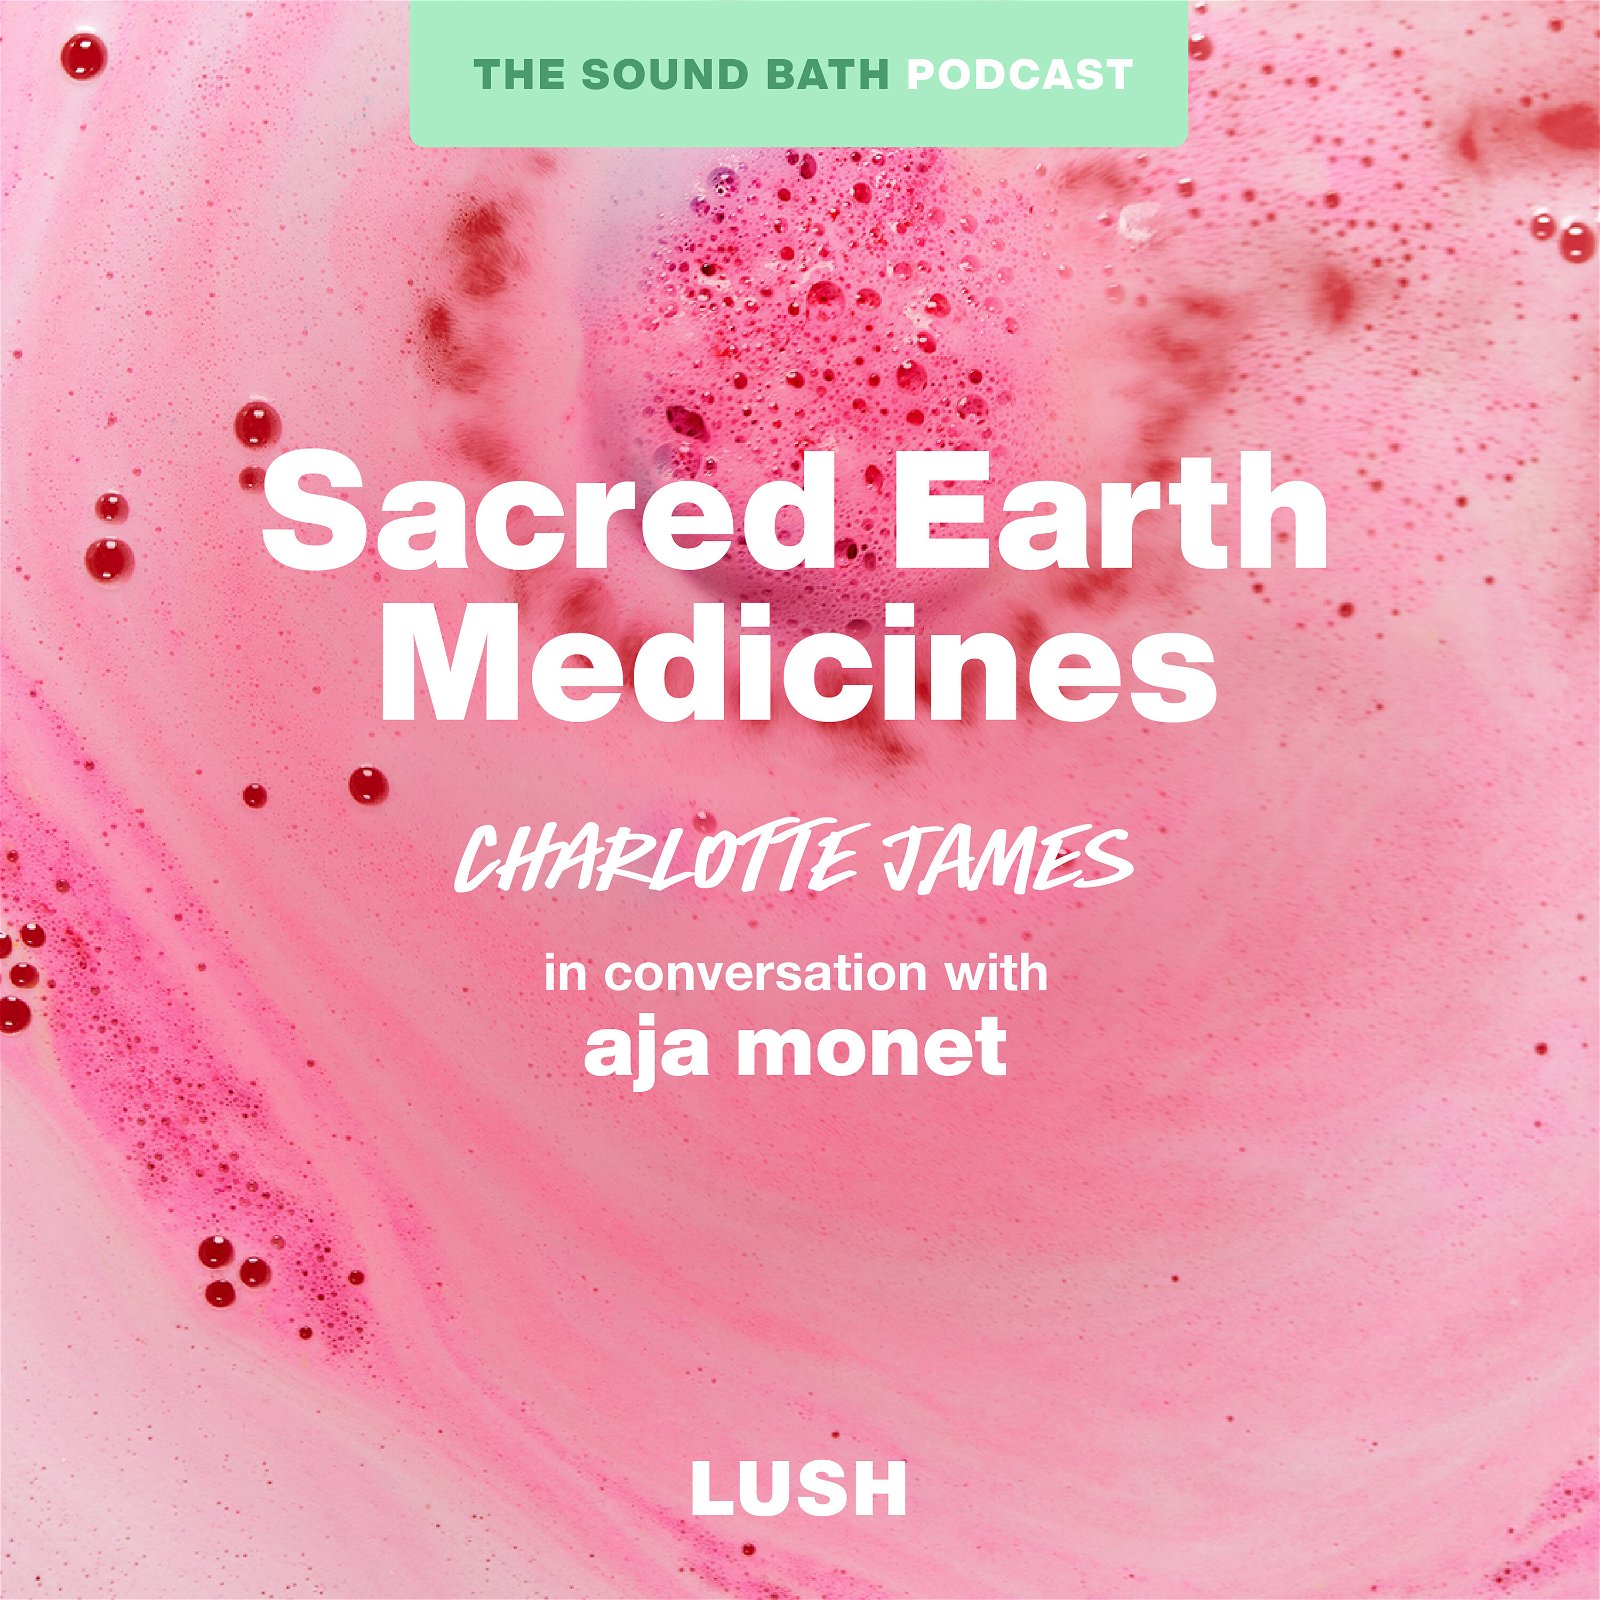 Charlotte James - Sacred Earth Medicines